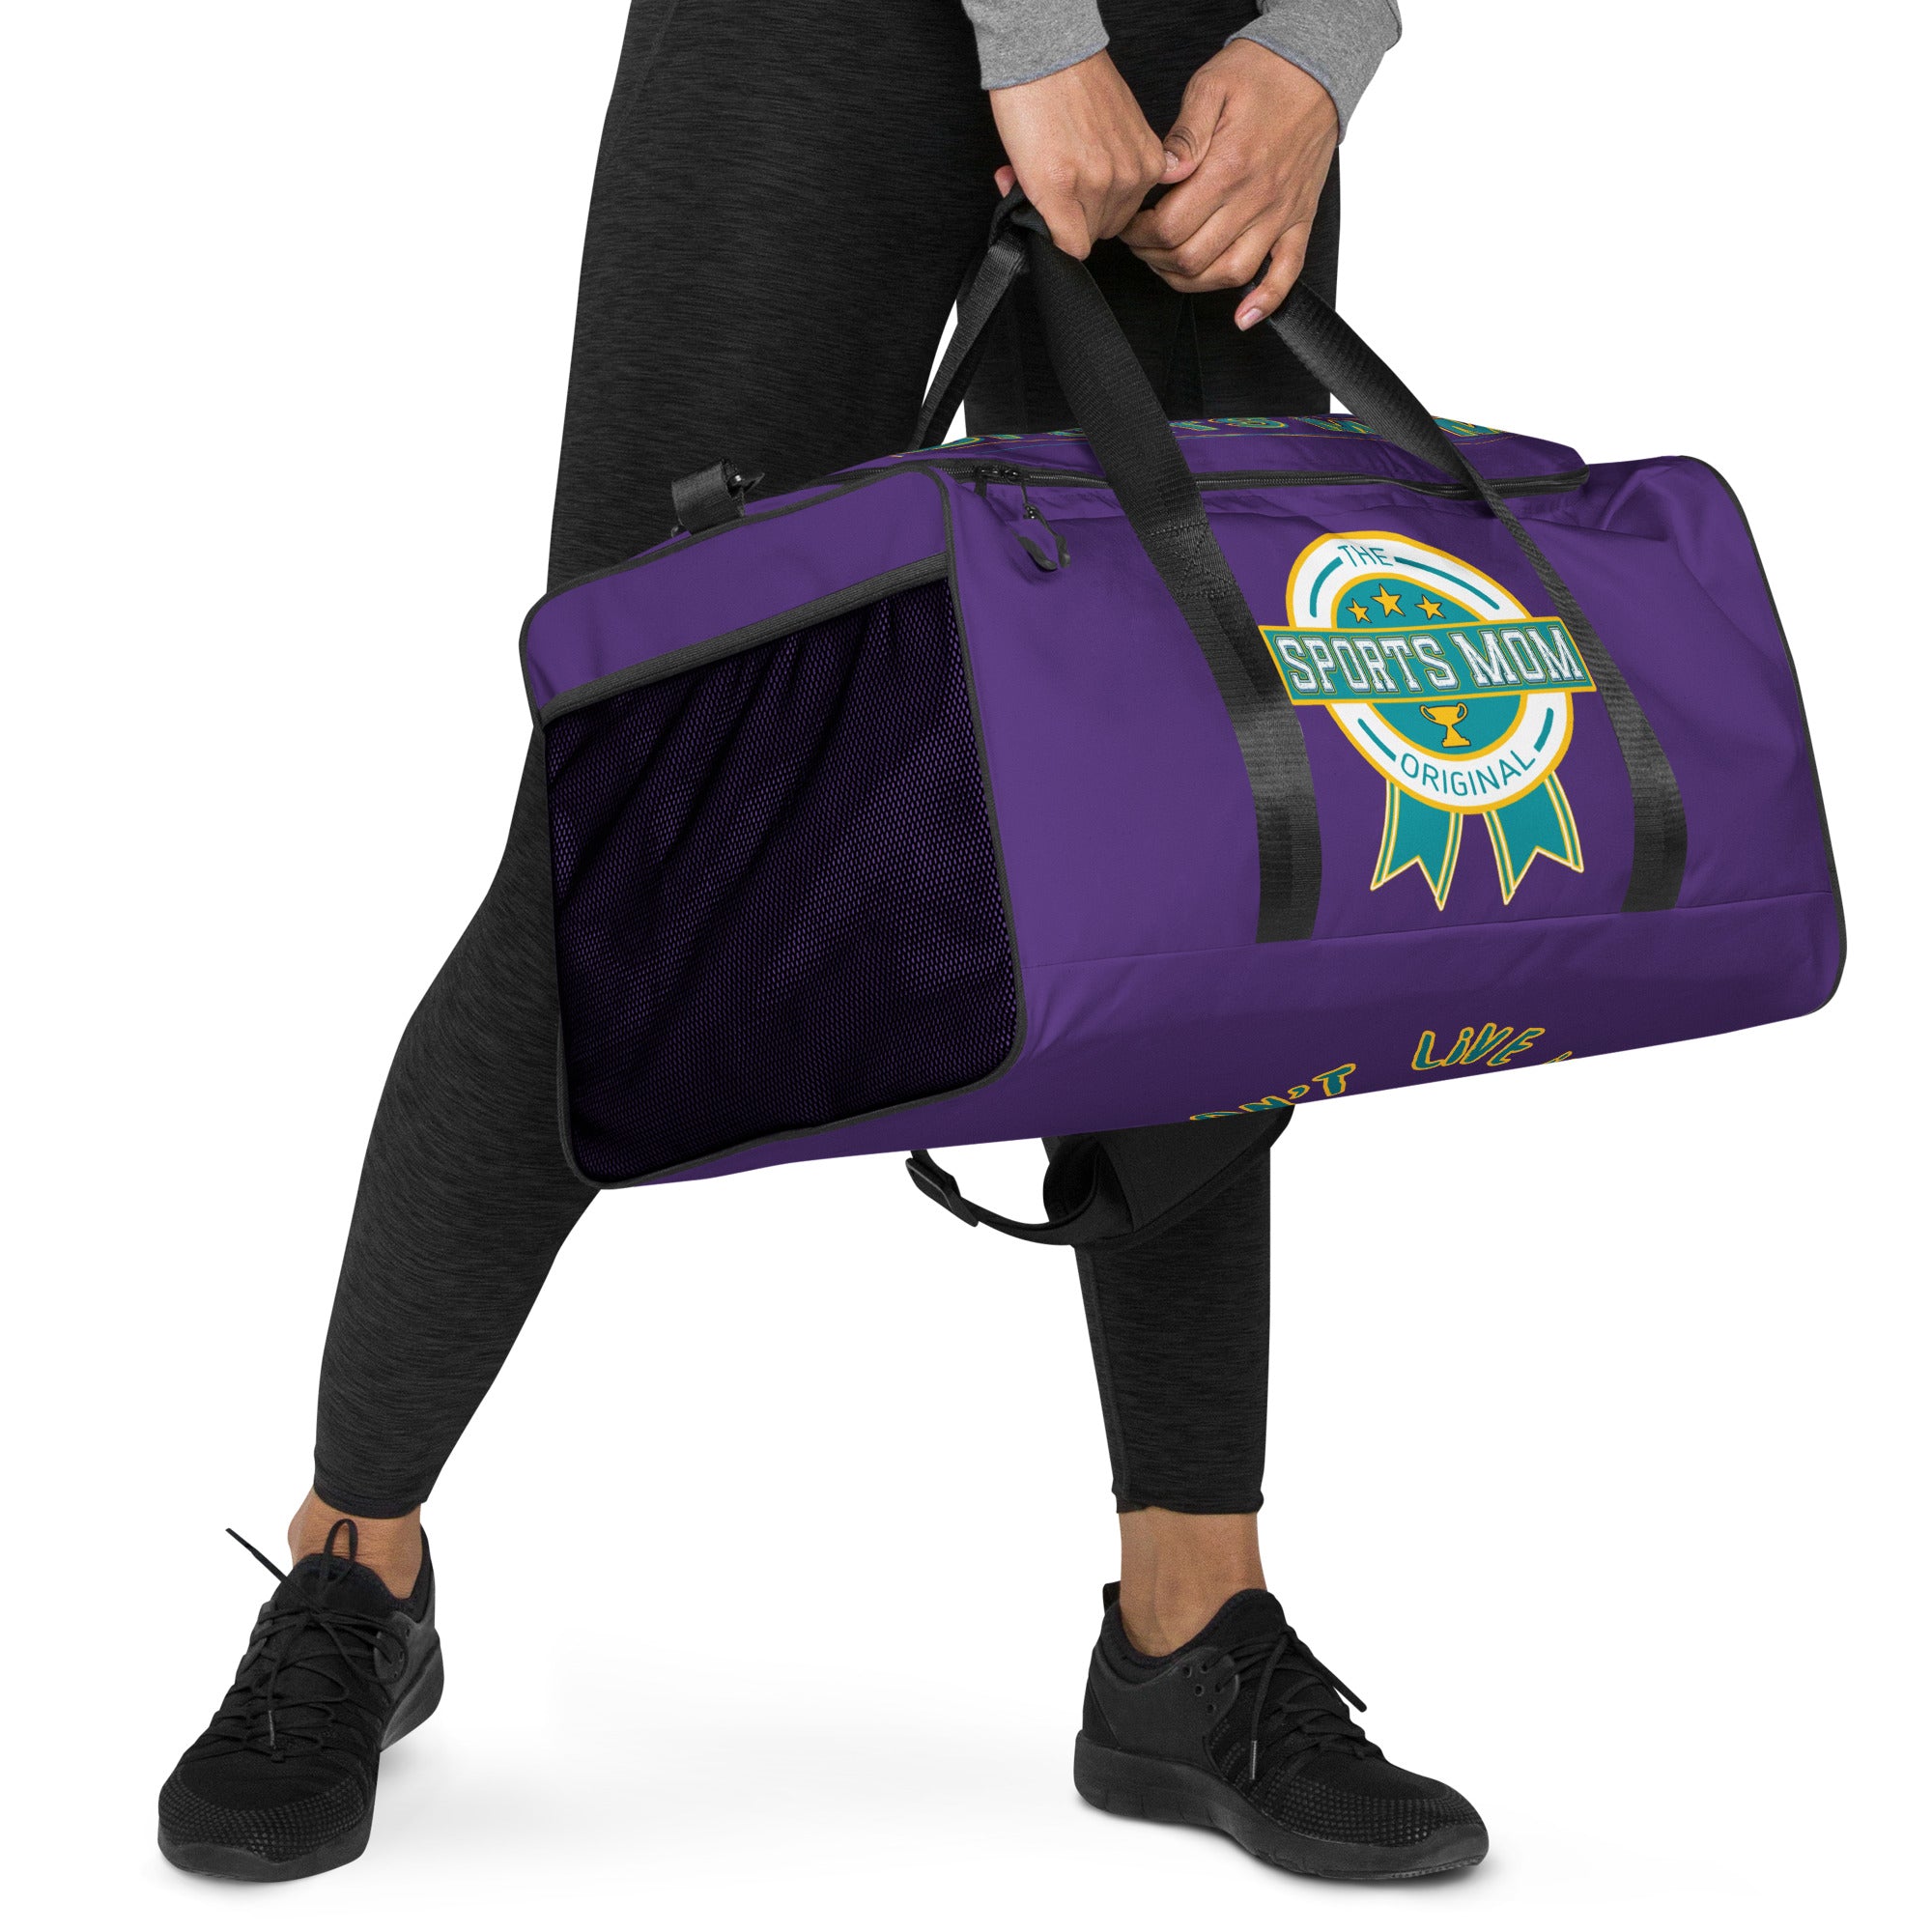 Sports Mom Ultimate Duffle Bag - Indigo